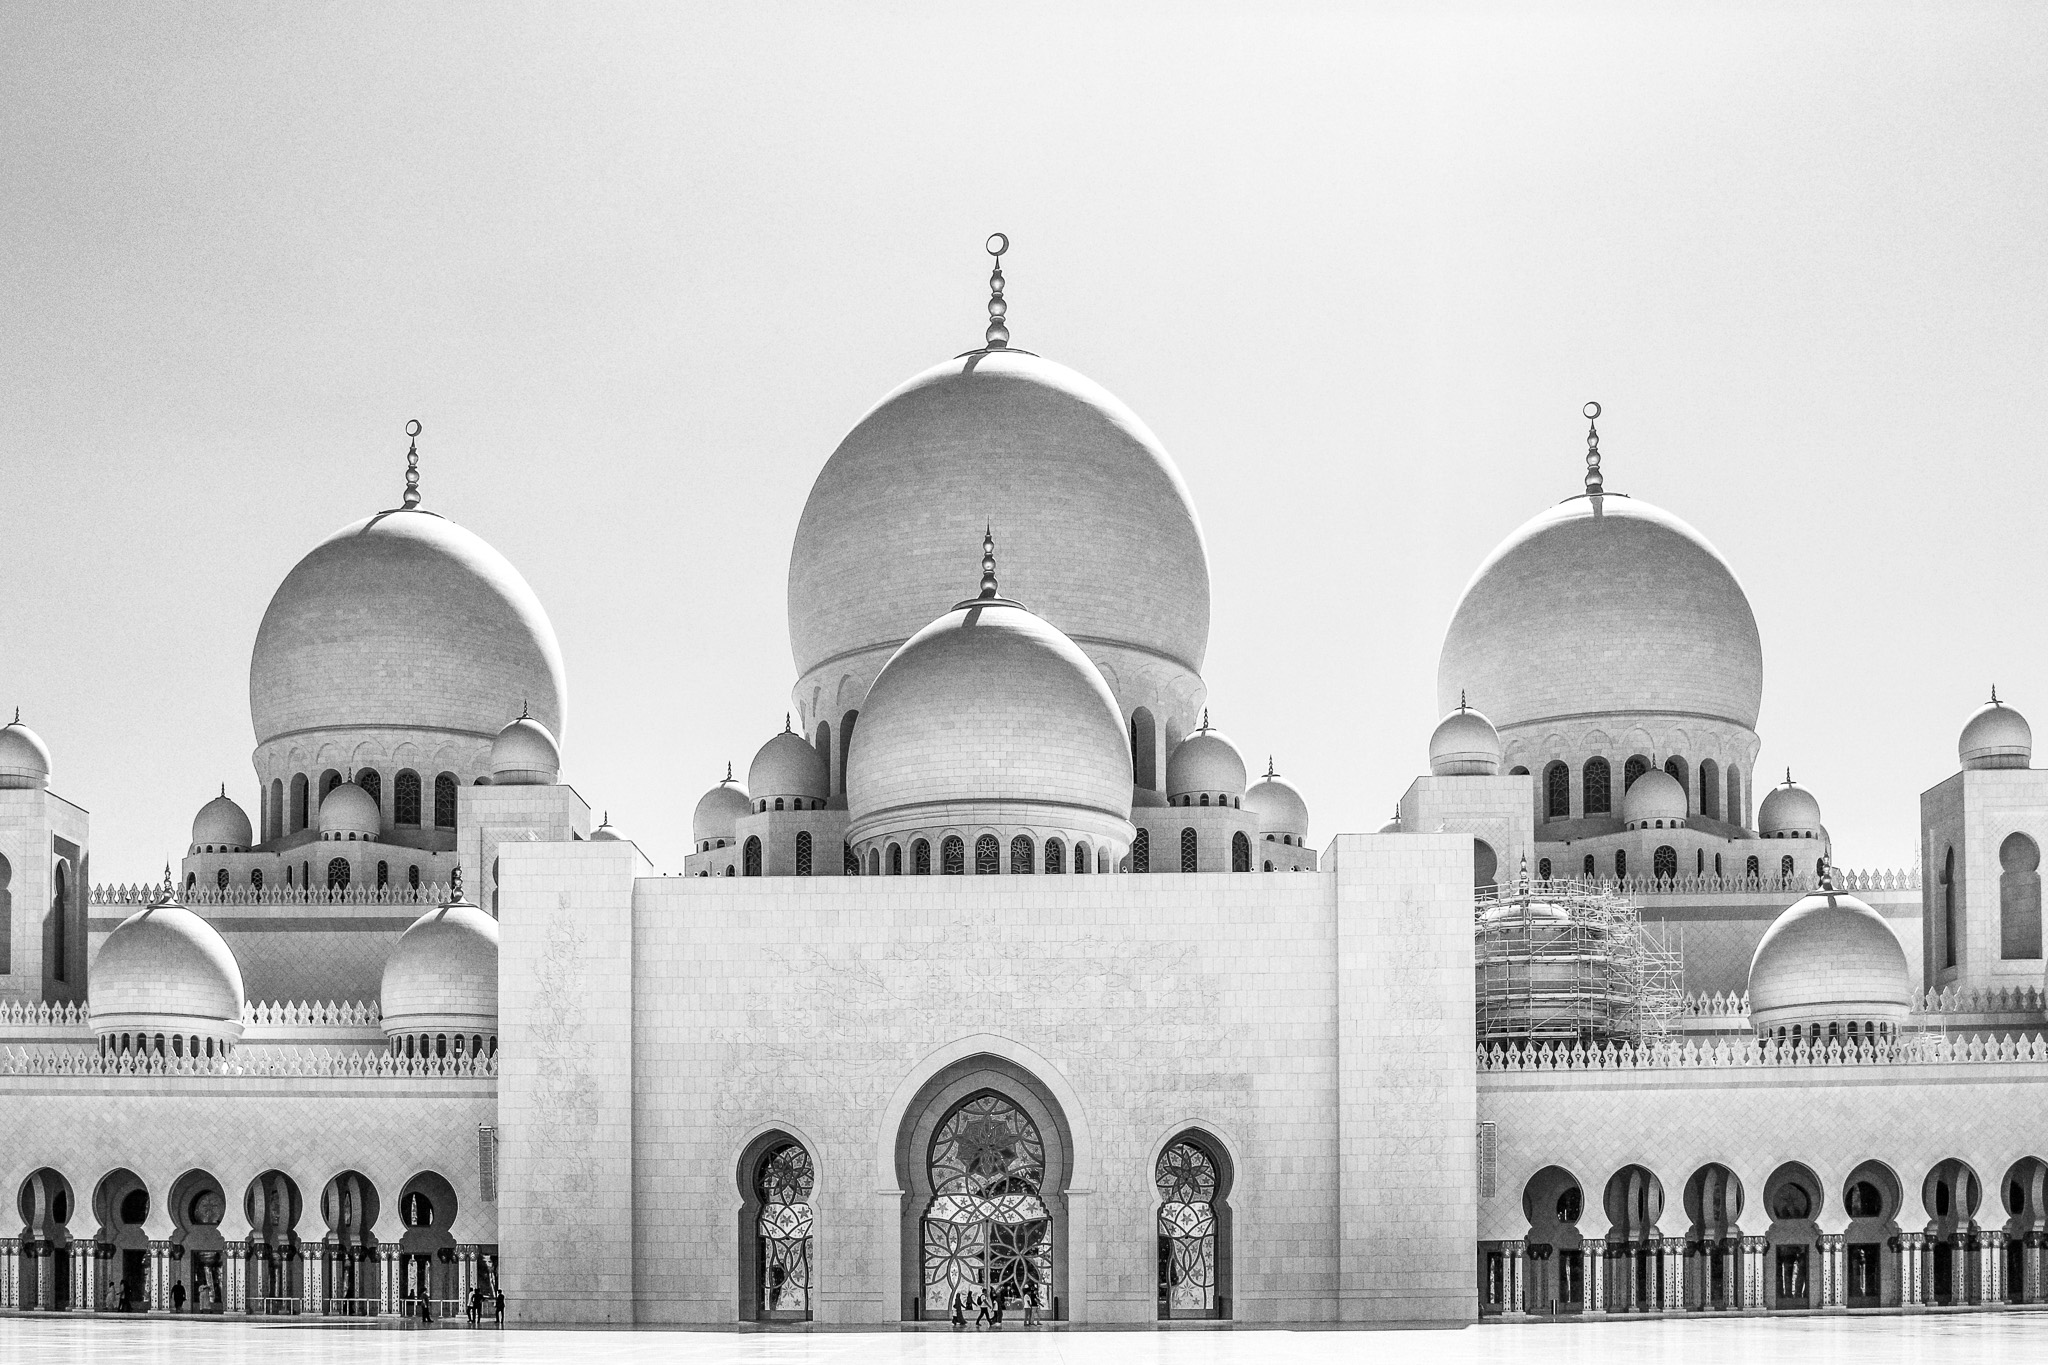 Shaikh Zayed Grand Mosque (Abu Dhabi)